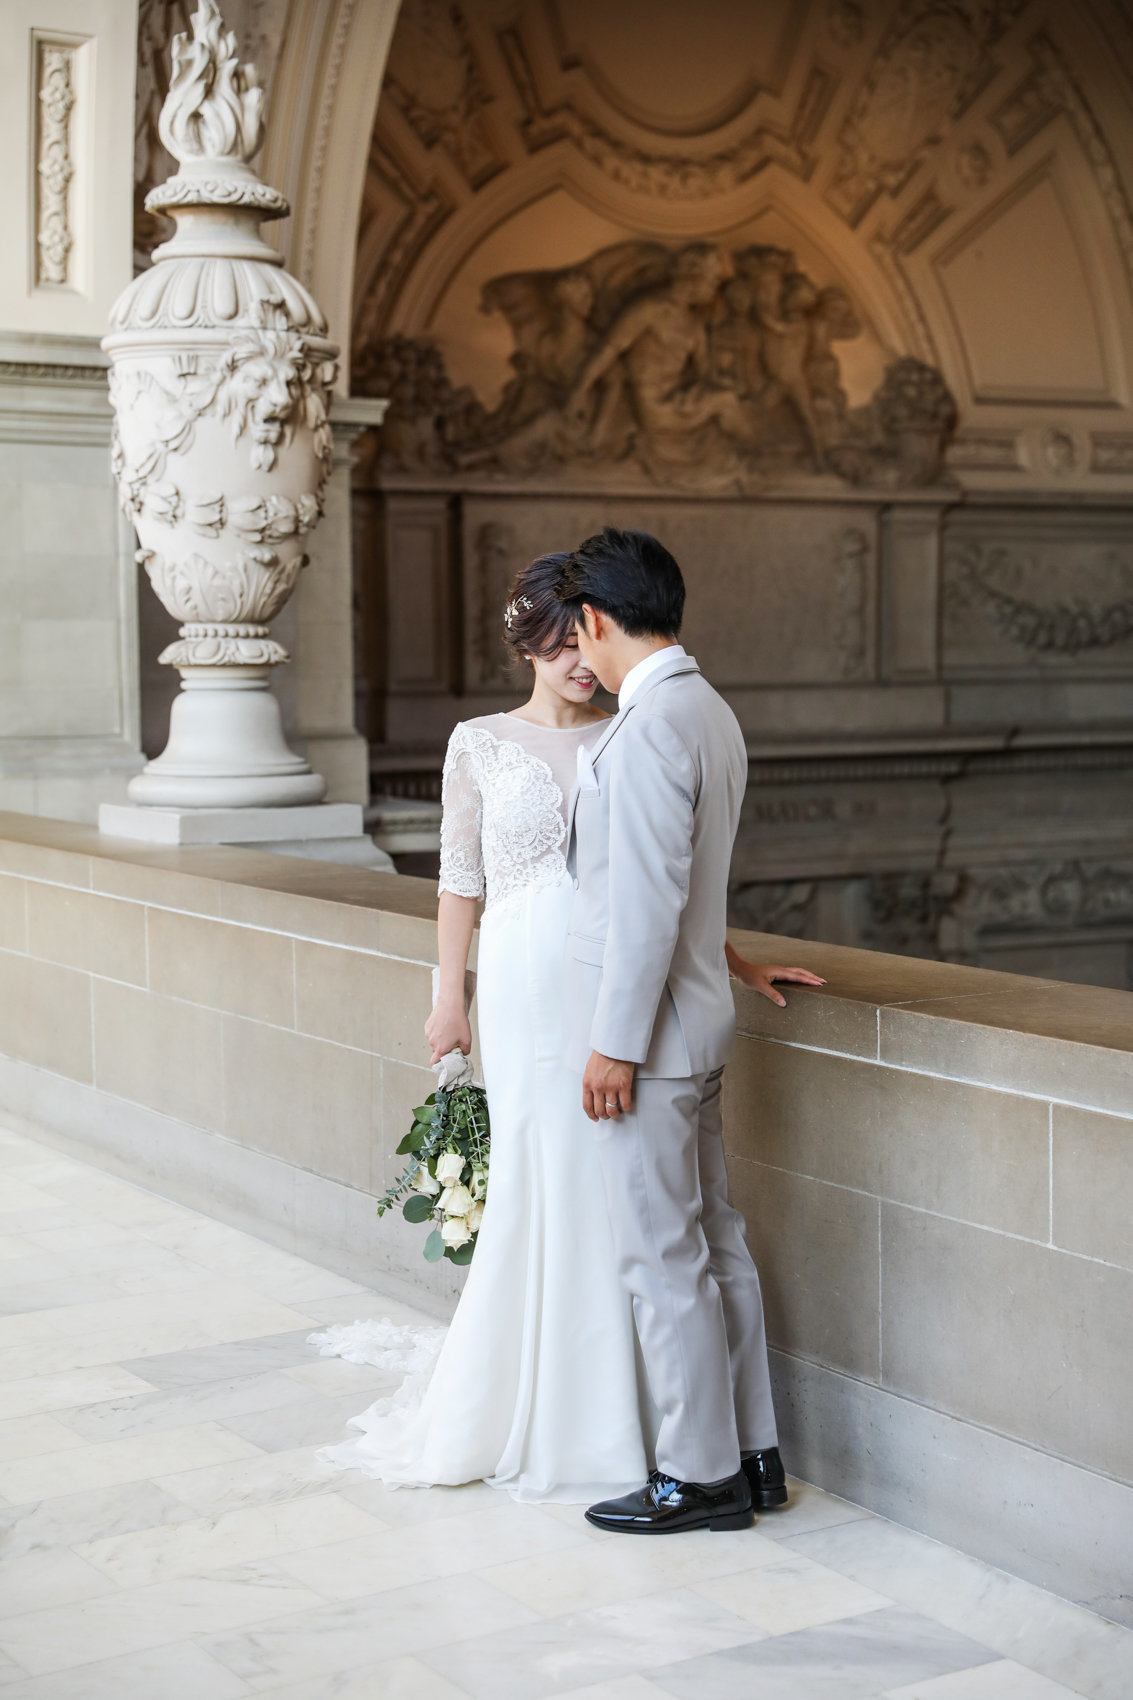 DeNeffe studios wedding photography, portrait of bride and groom, engagement photoshoot